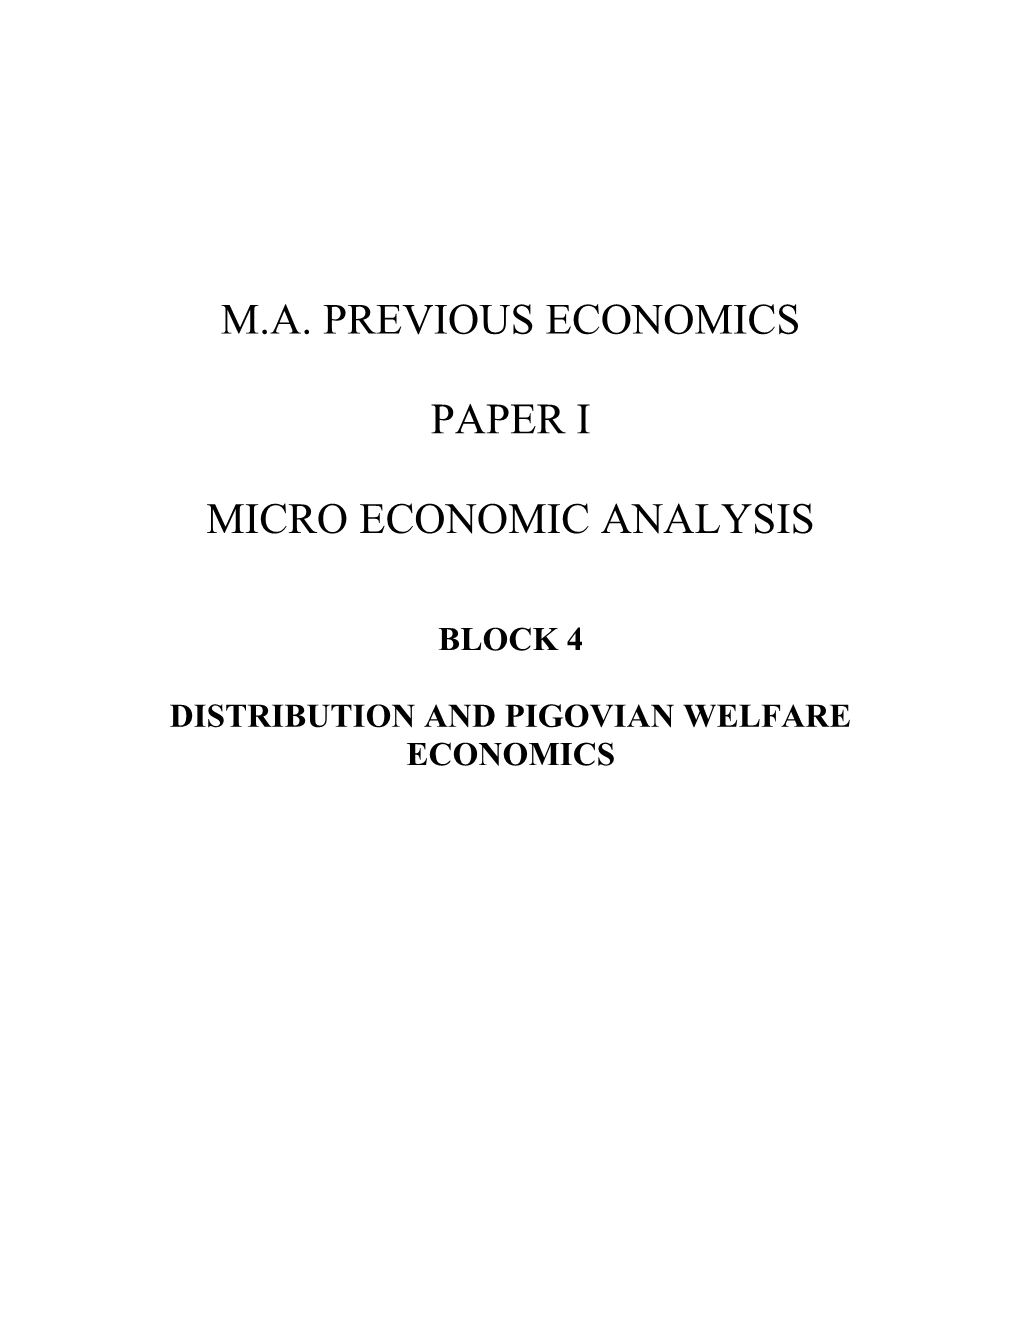 Distribution and Pigovian Welfare Economics